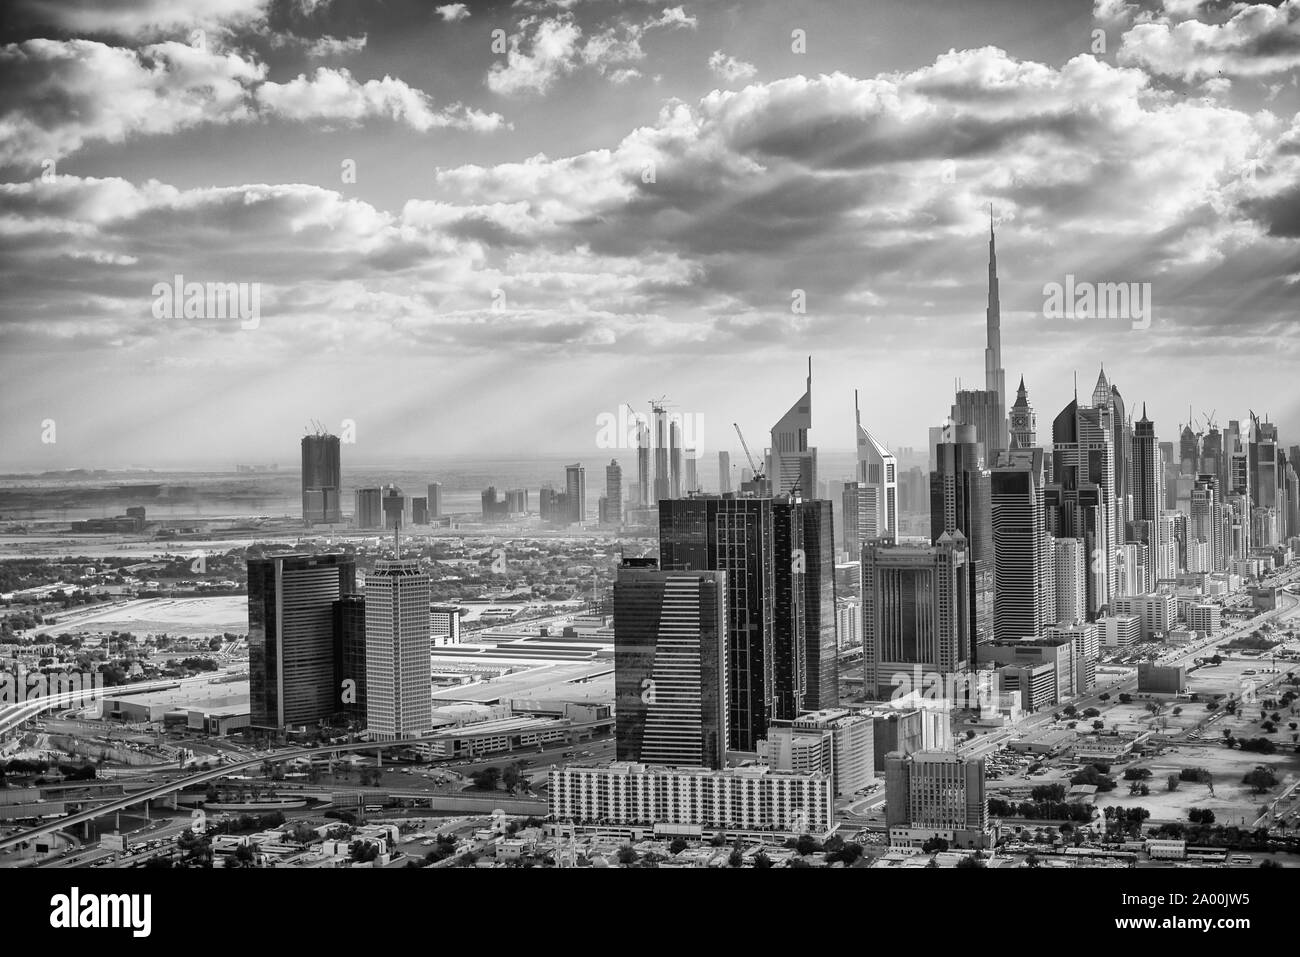 Downtown Dubai as seen from the sky at sunset, modern city skyline. Stock Photo